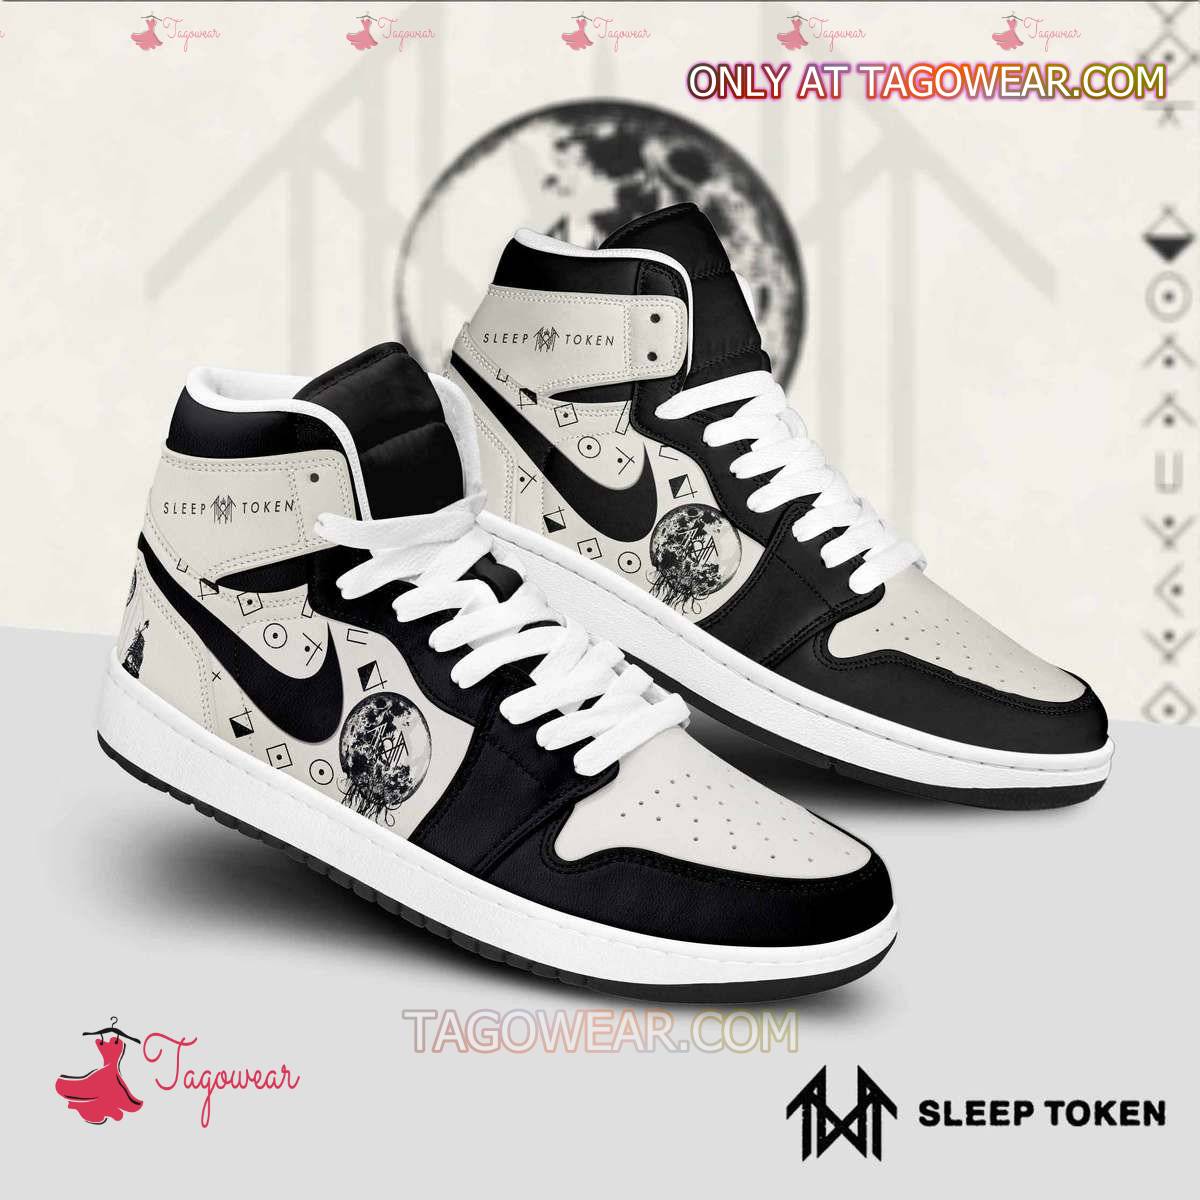 Sleep Token Air Jordan High Top Shoes